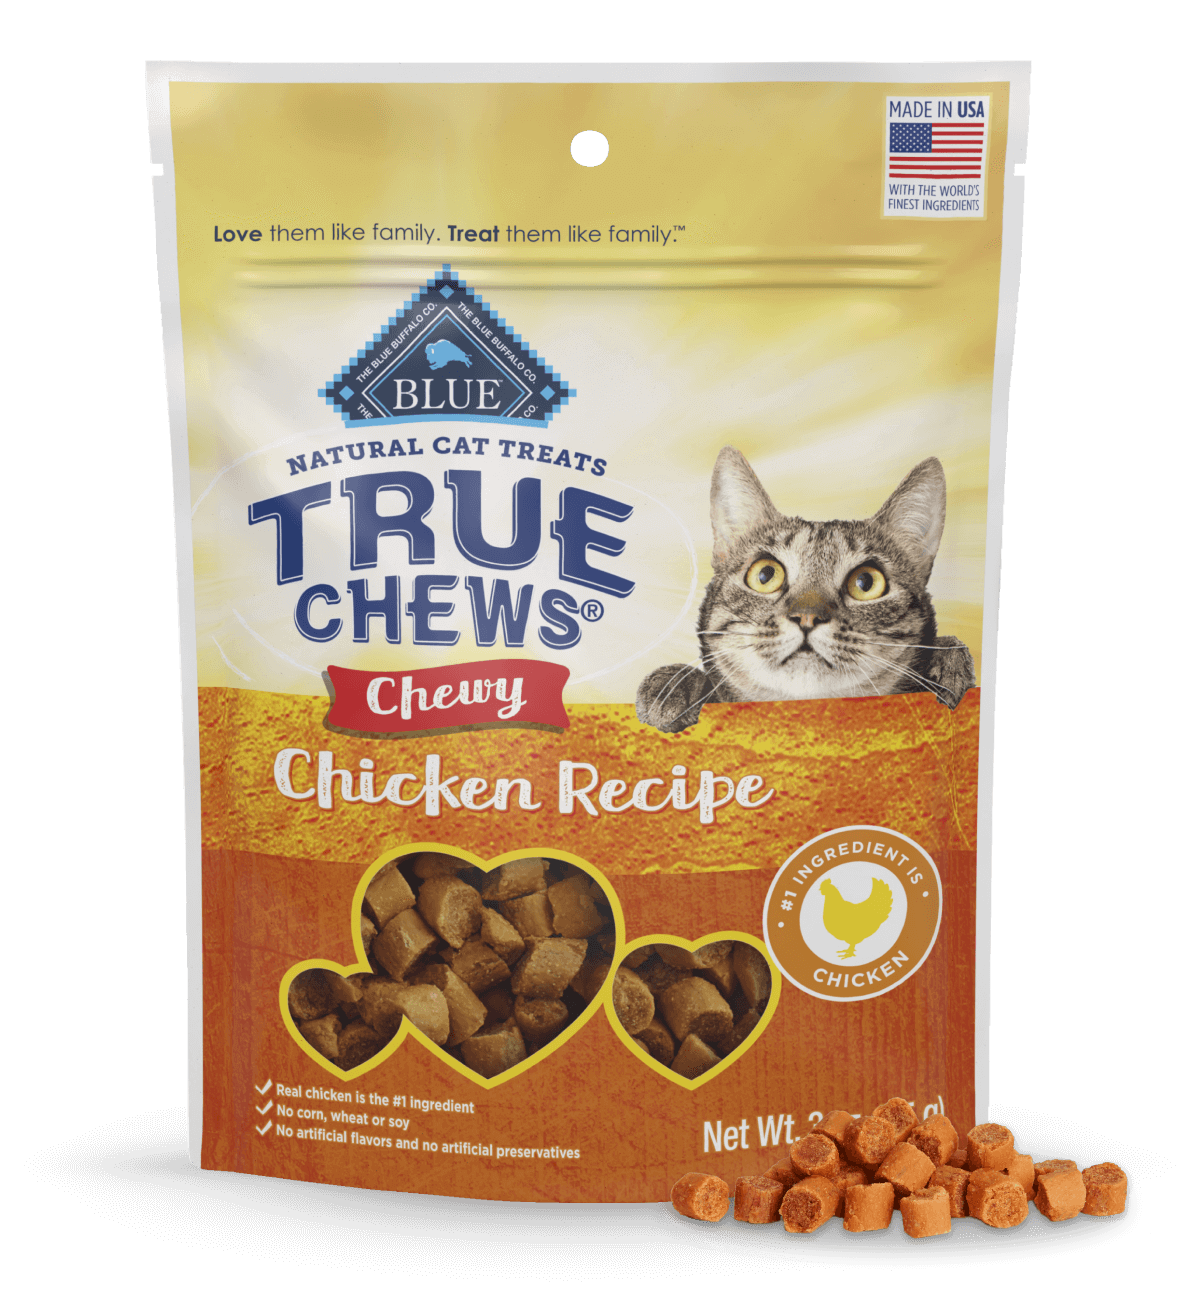 blue true chews ® delicious chicken recipe chewy cat treats cat treats